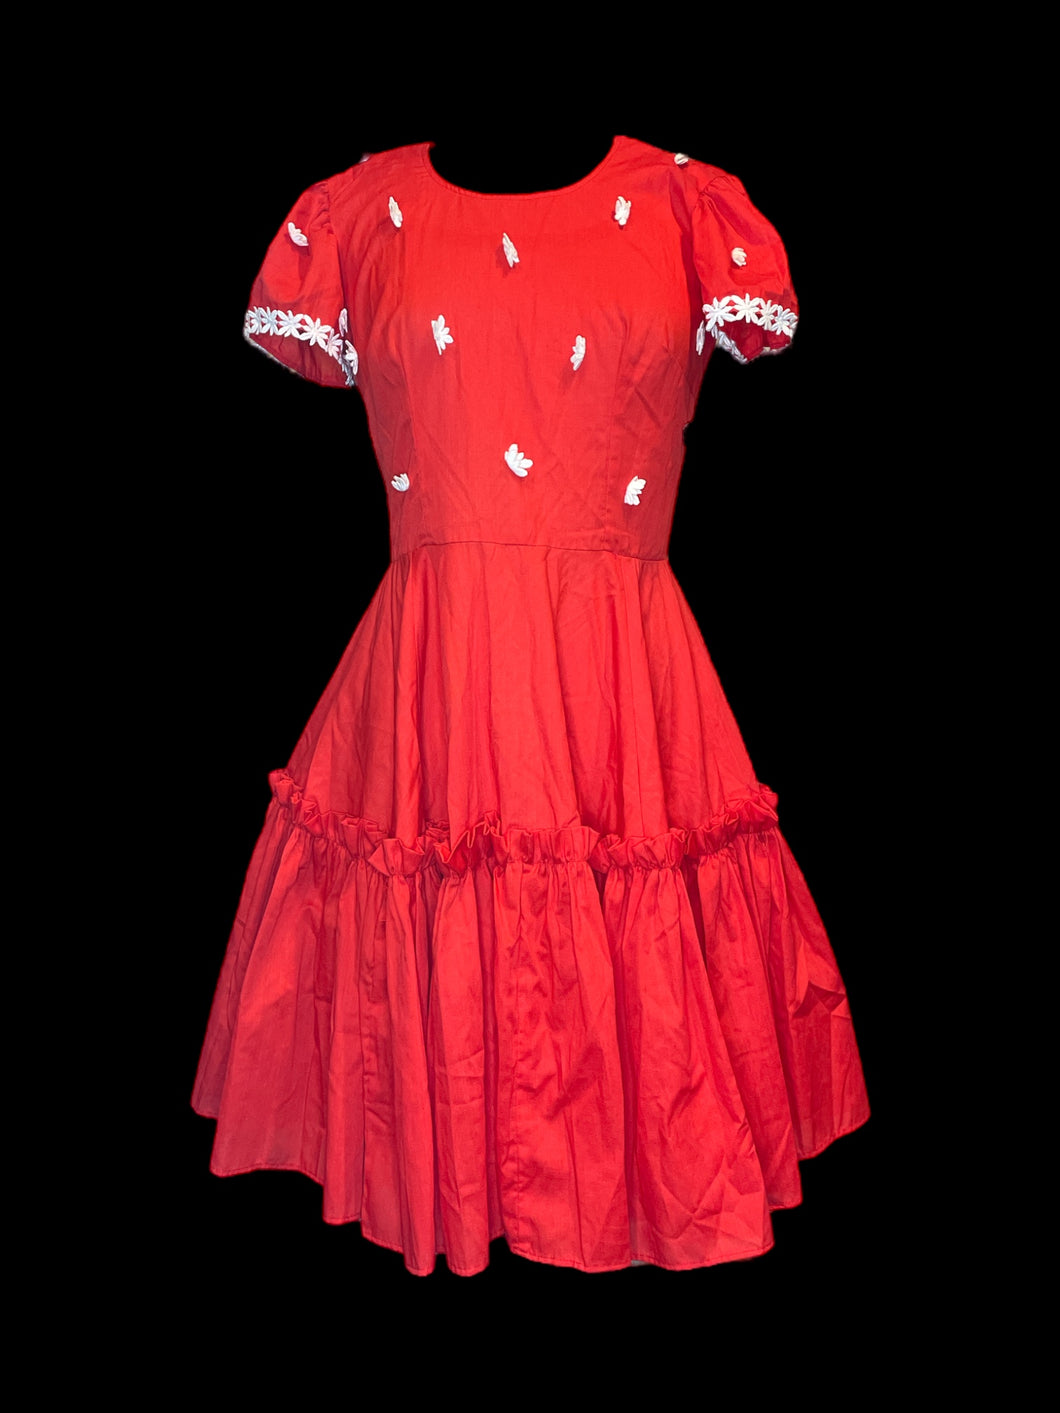 M Red short-sleeve dress w/ 3D embroidered white flowers, ruffle skirt, & zipper closure